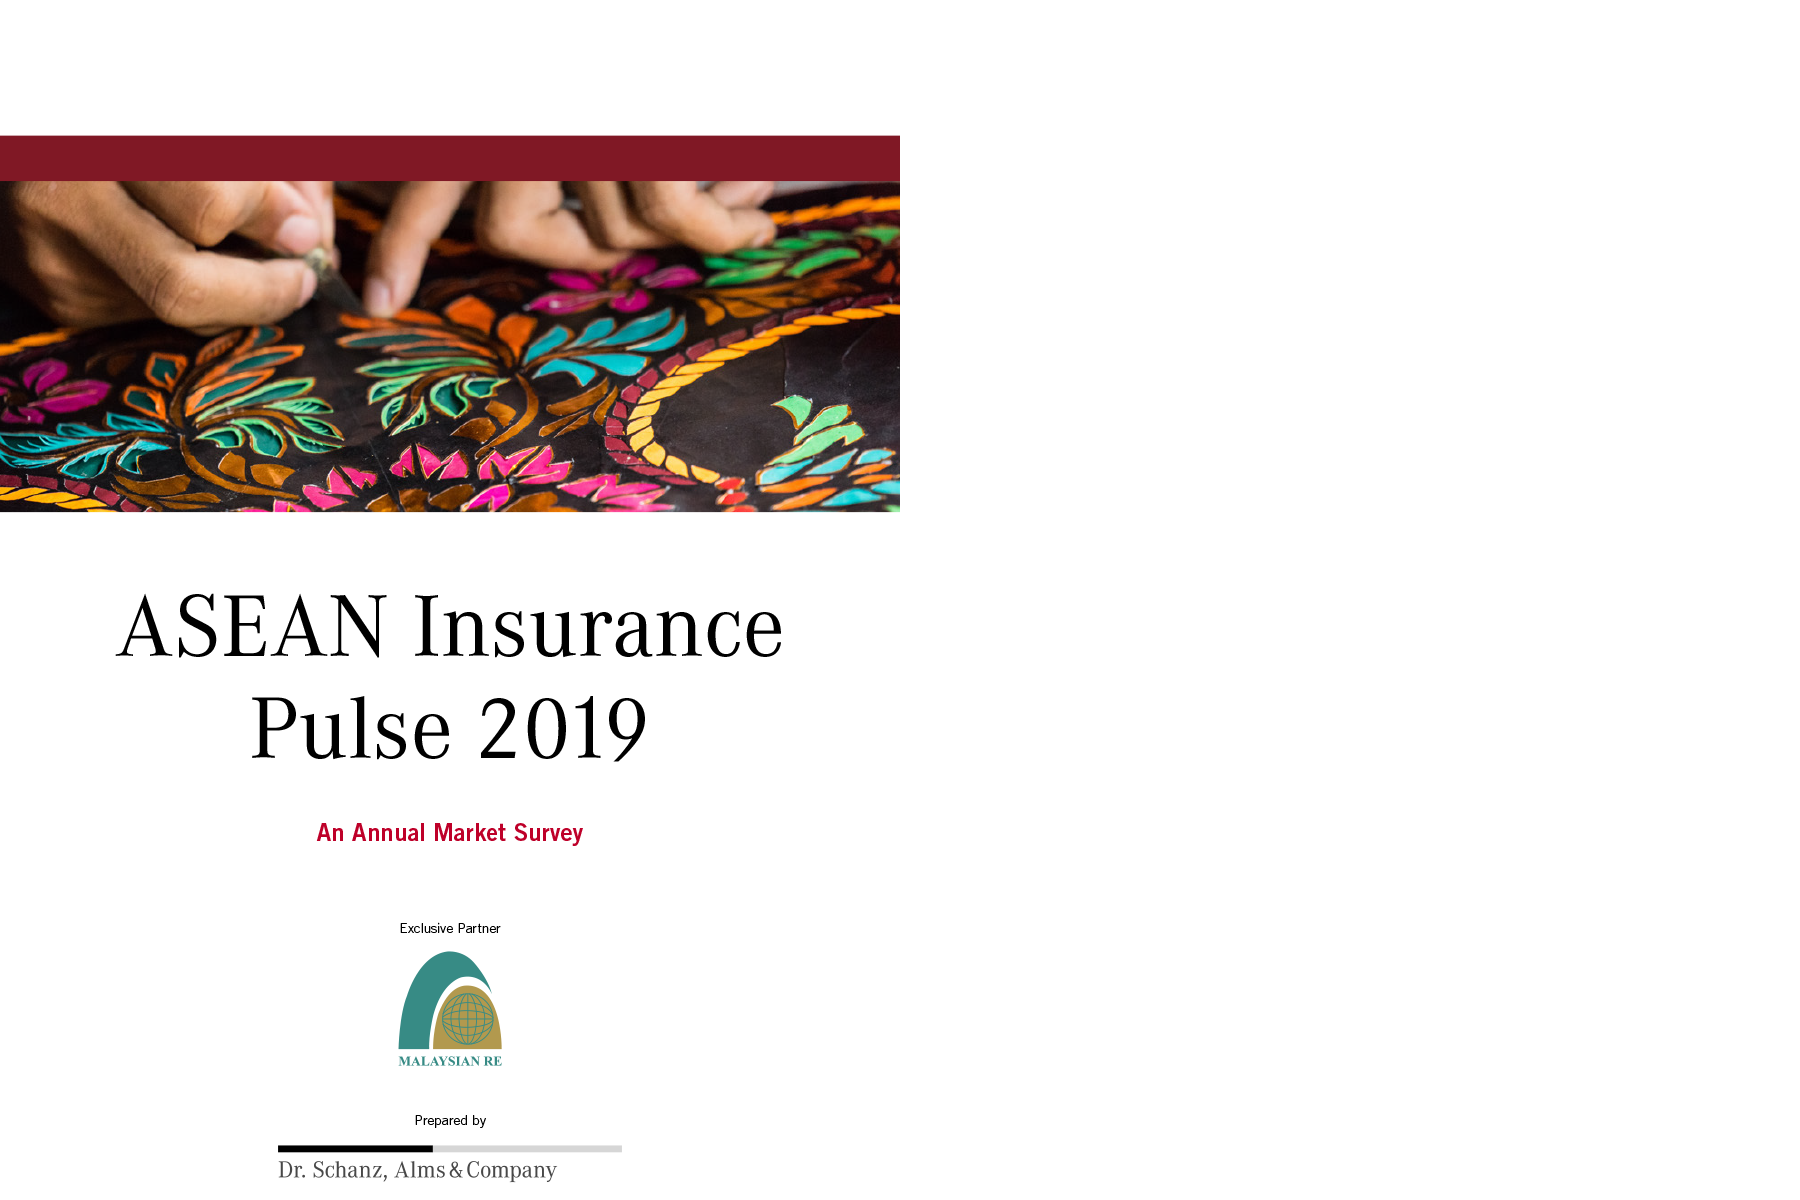 ASEAN Insurance Pulse 2019